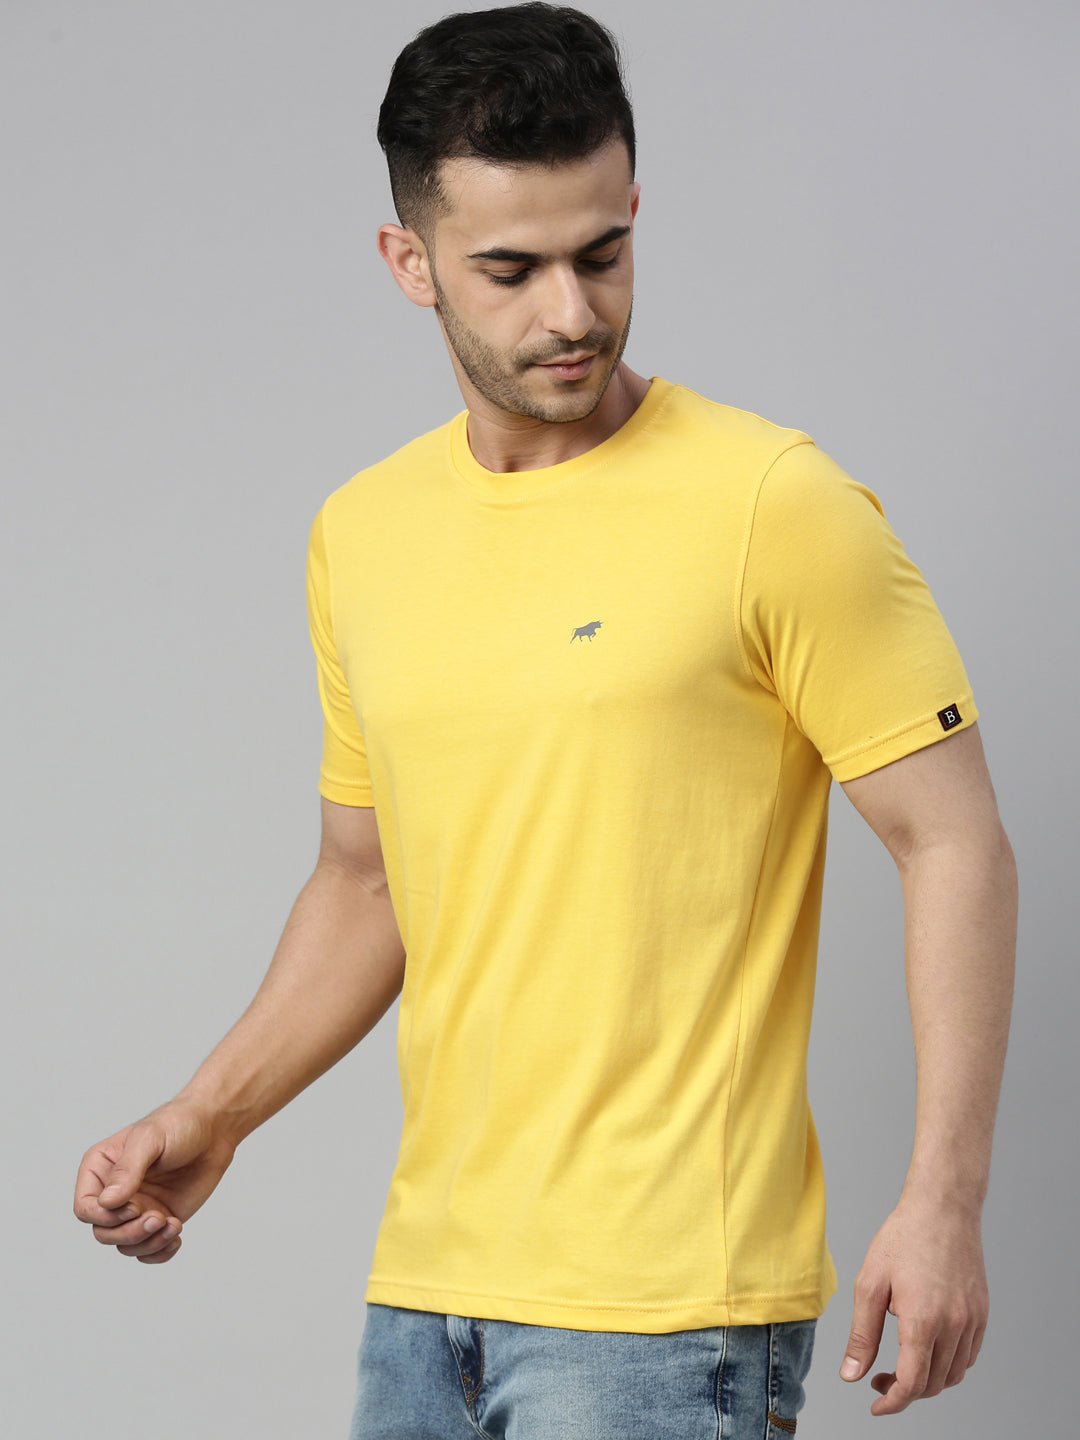 Basic Men's Plain T-Shirt | Yellow T-Shirt Half Sleeves | Neck T-Shirt